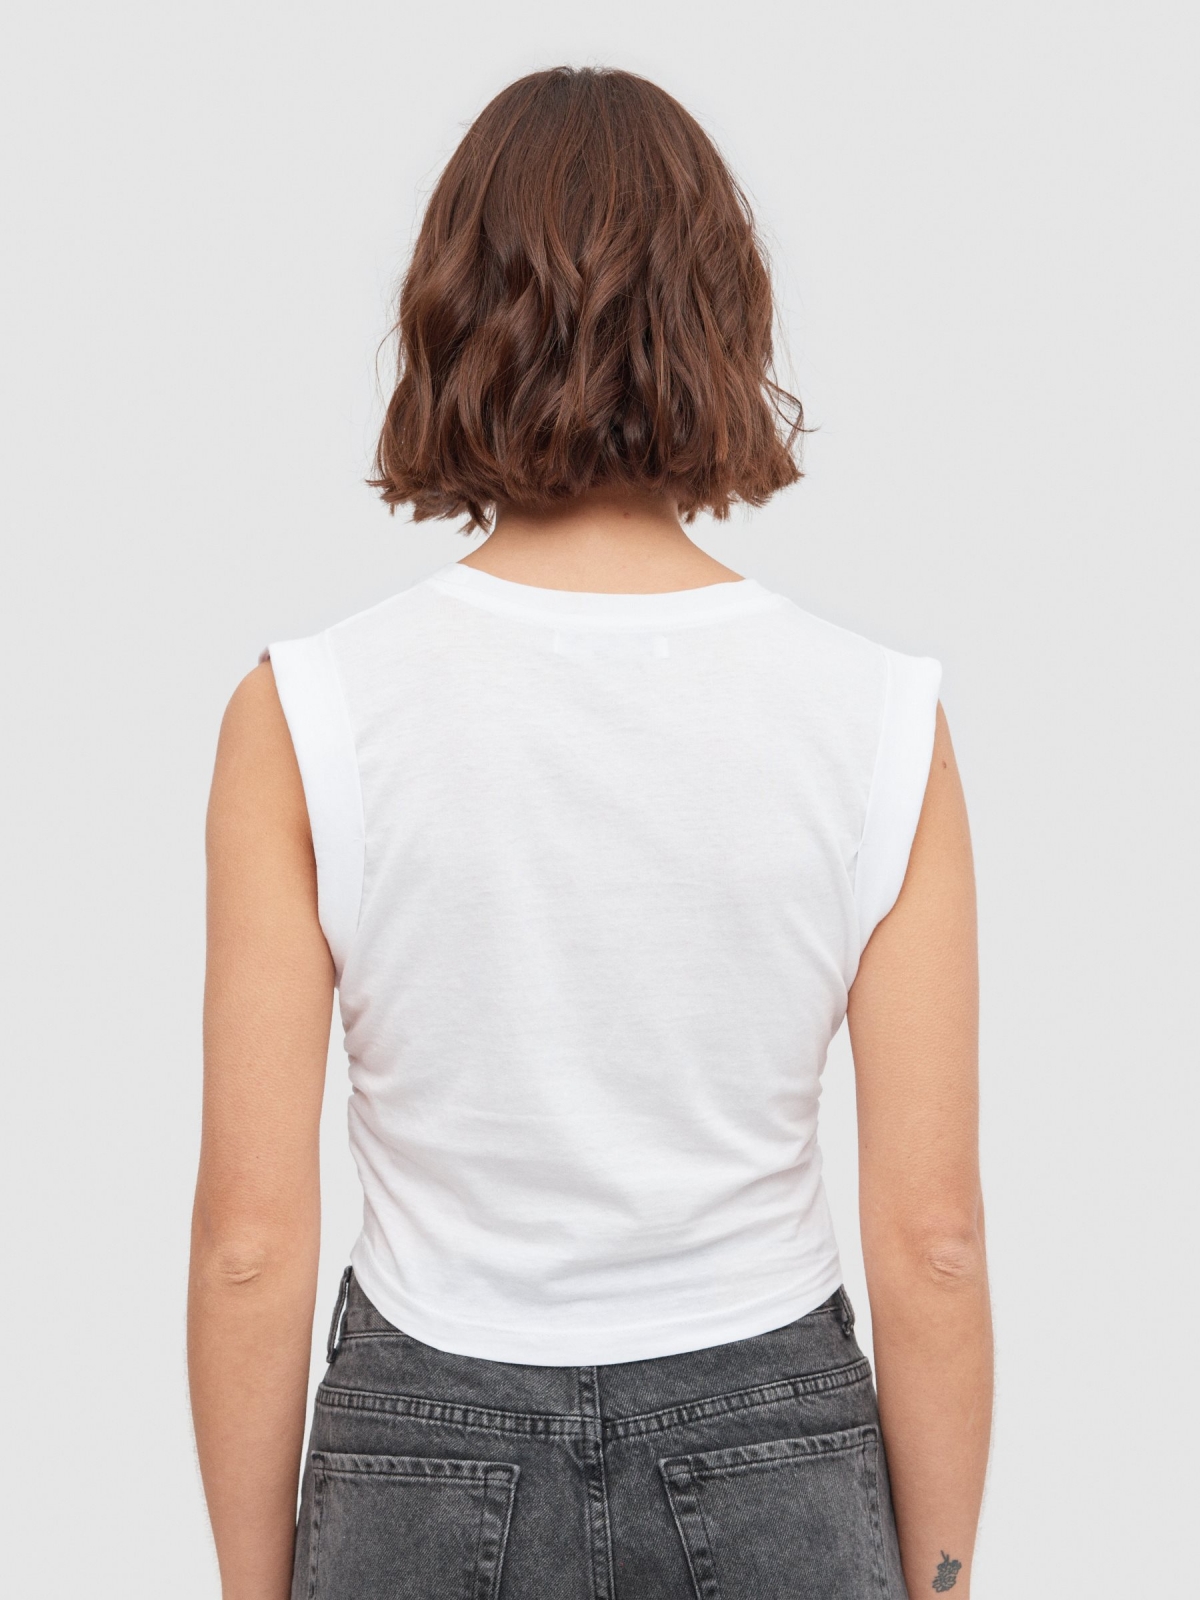 Camiseta fruncido lateral blanco vista media trasera